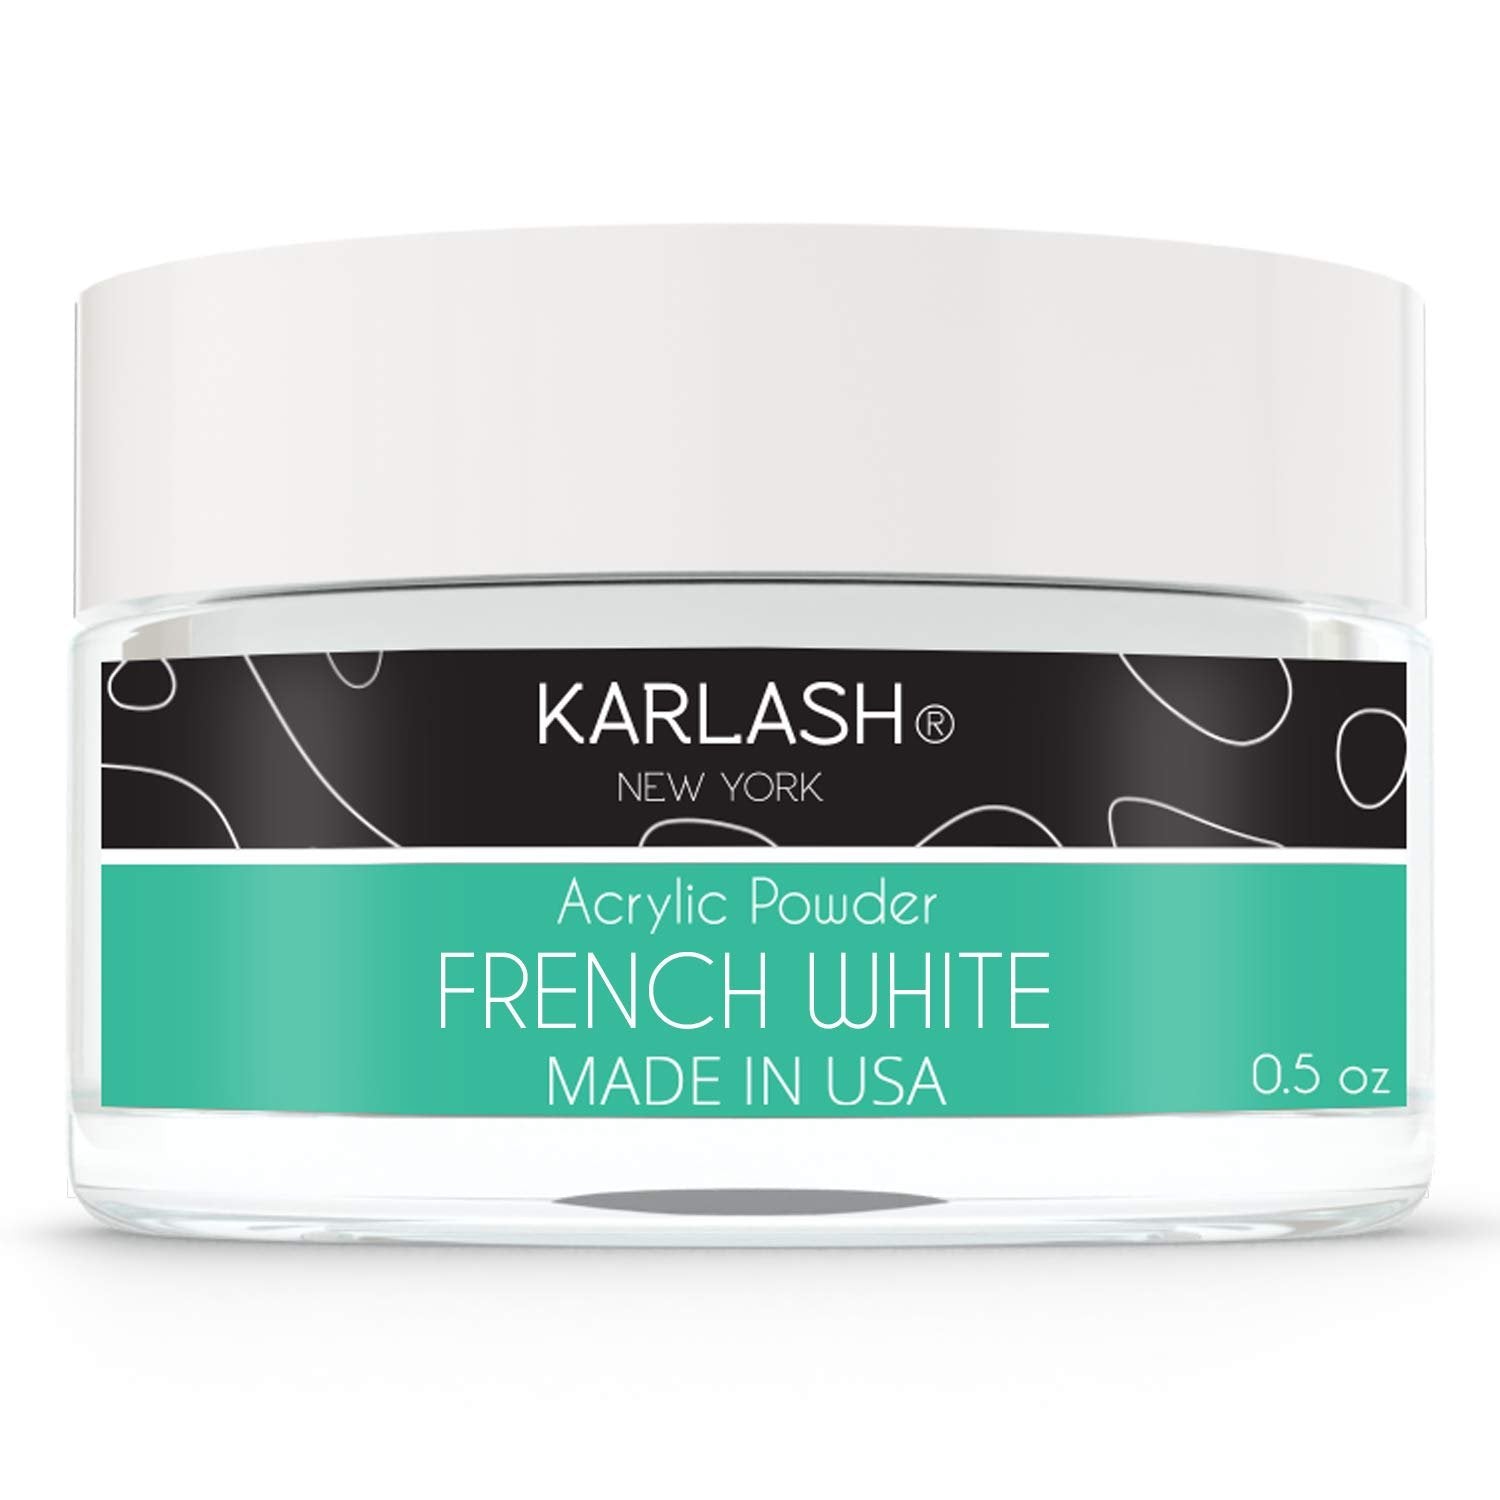 Karlash Professional Acrylic Powder French White 0.5 oz